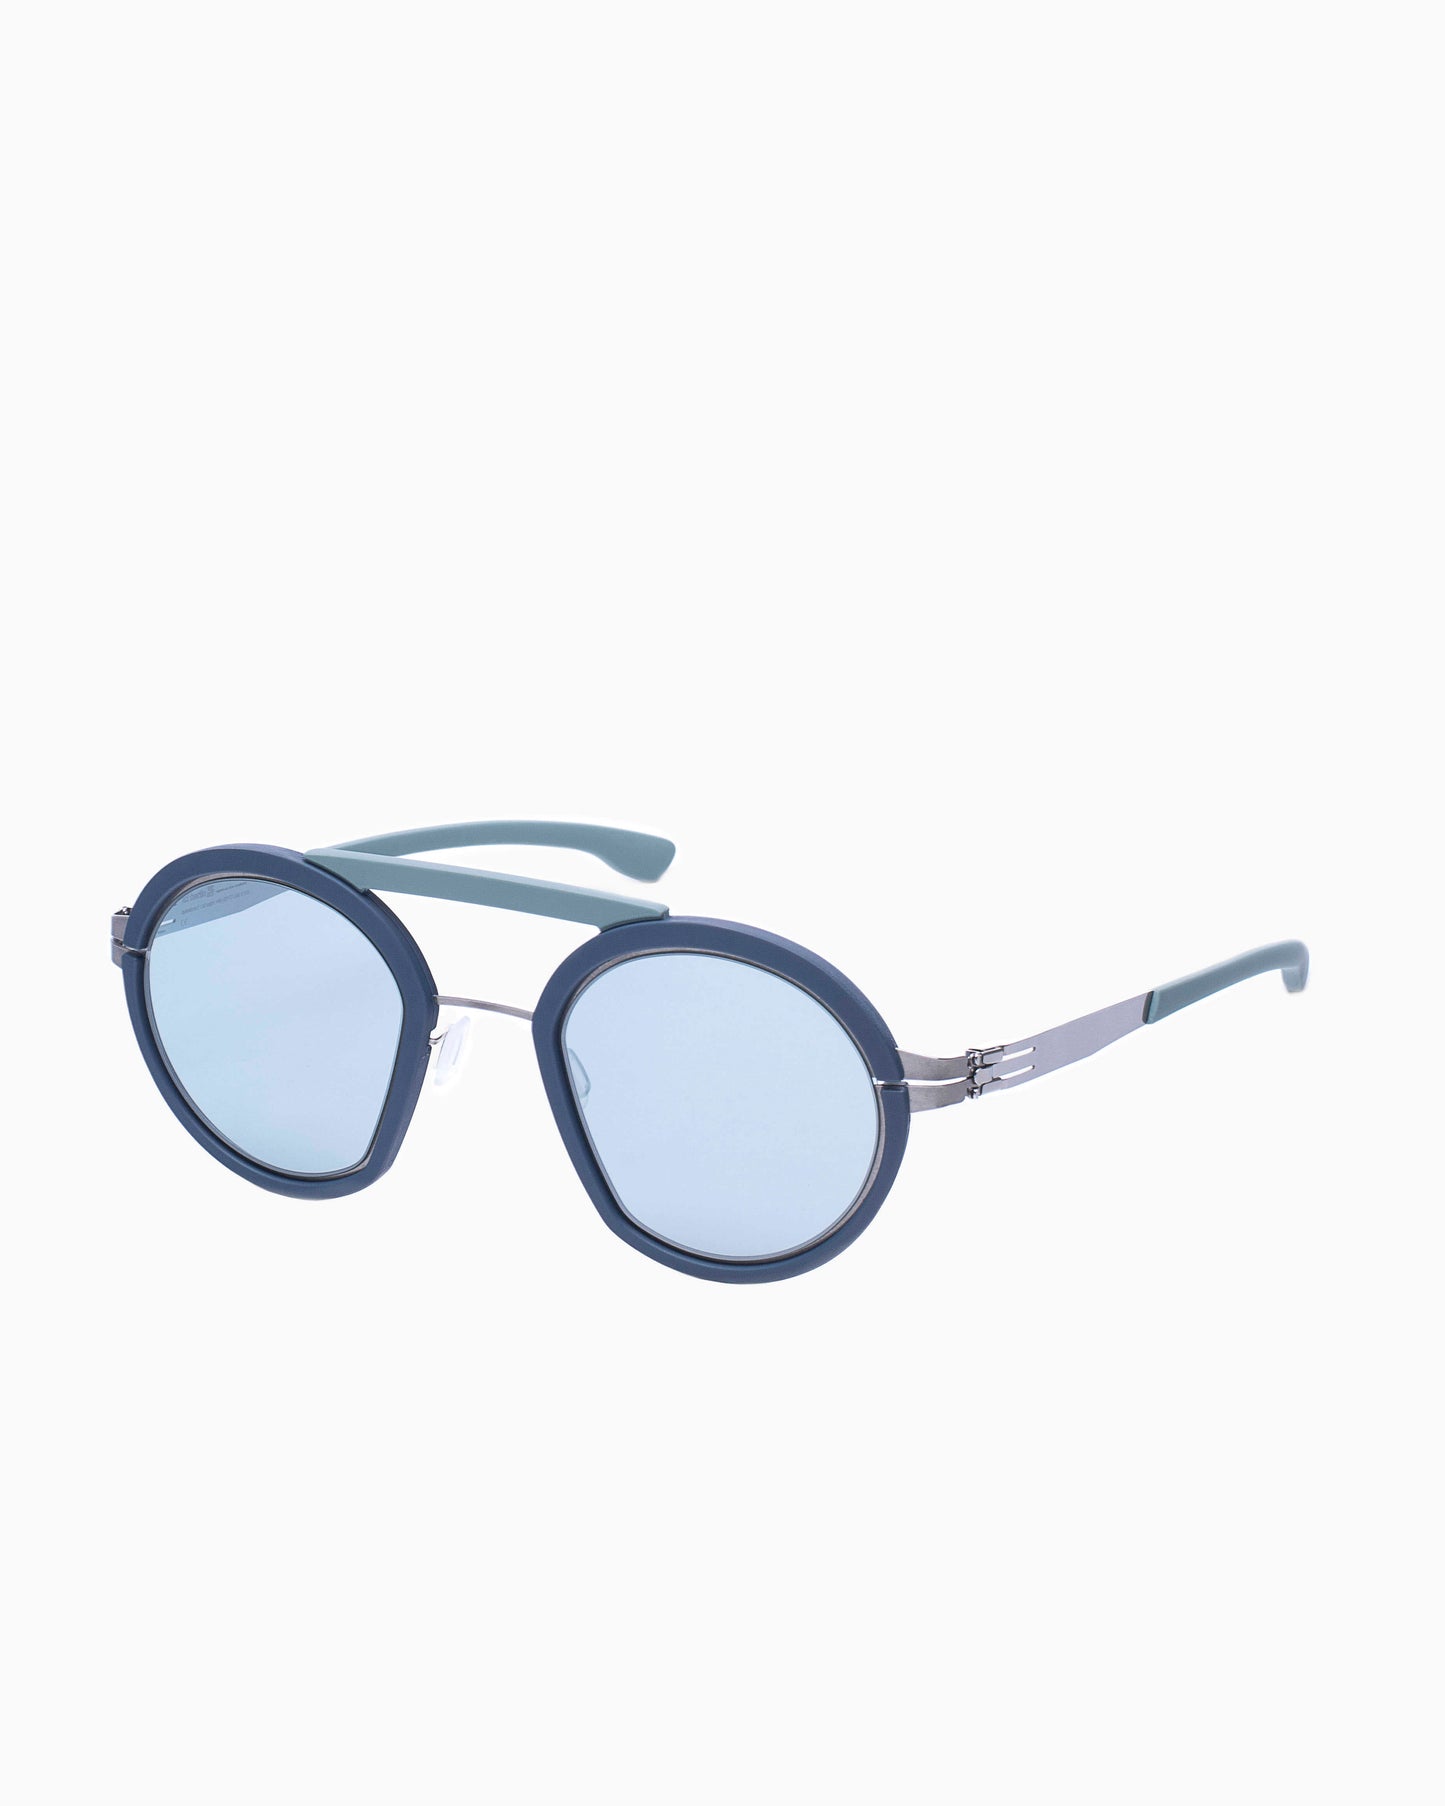 Ic Berlin - thesupervillain - chrome-blue-mint | Bar à lunettes